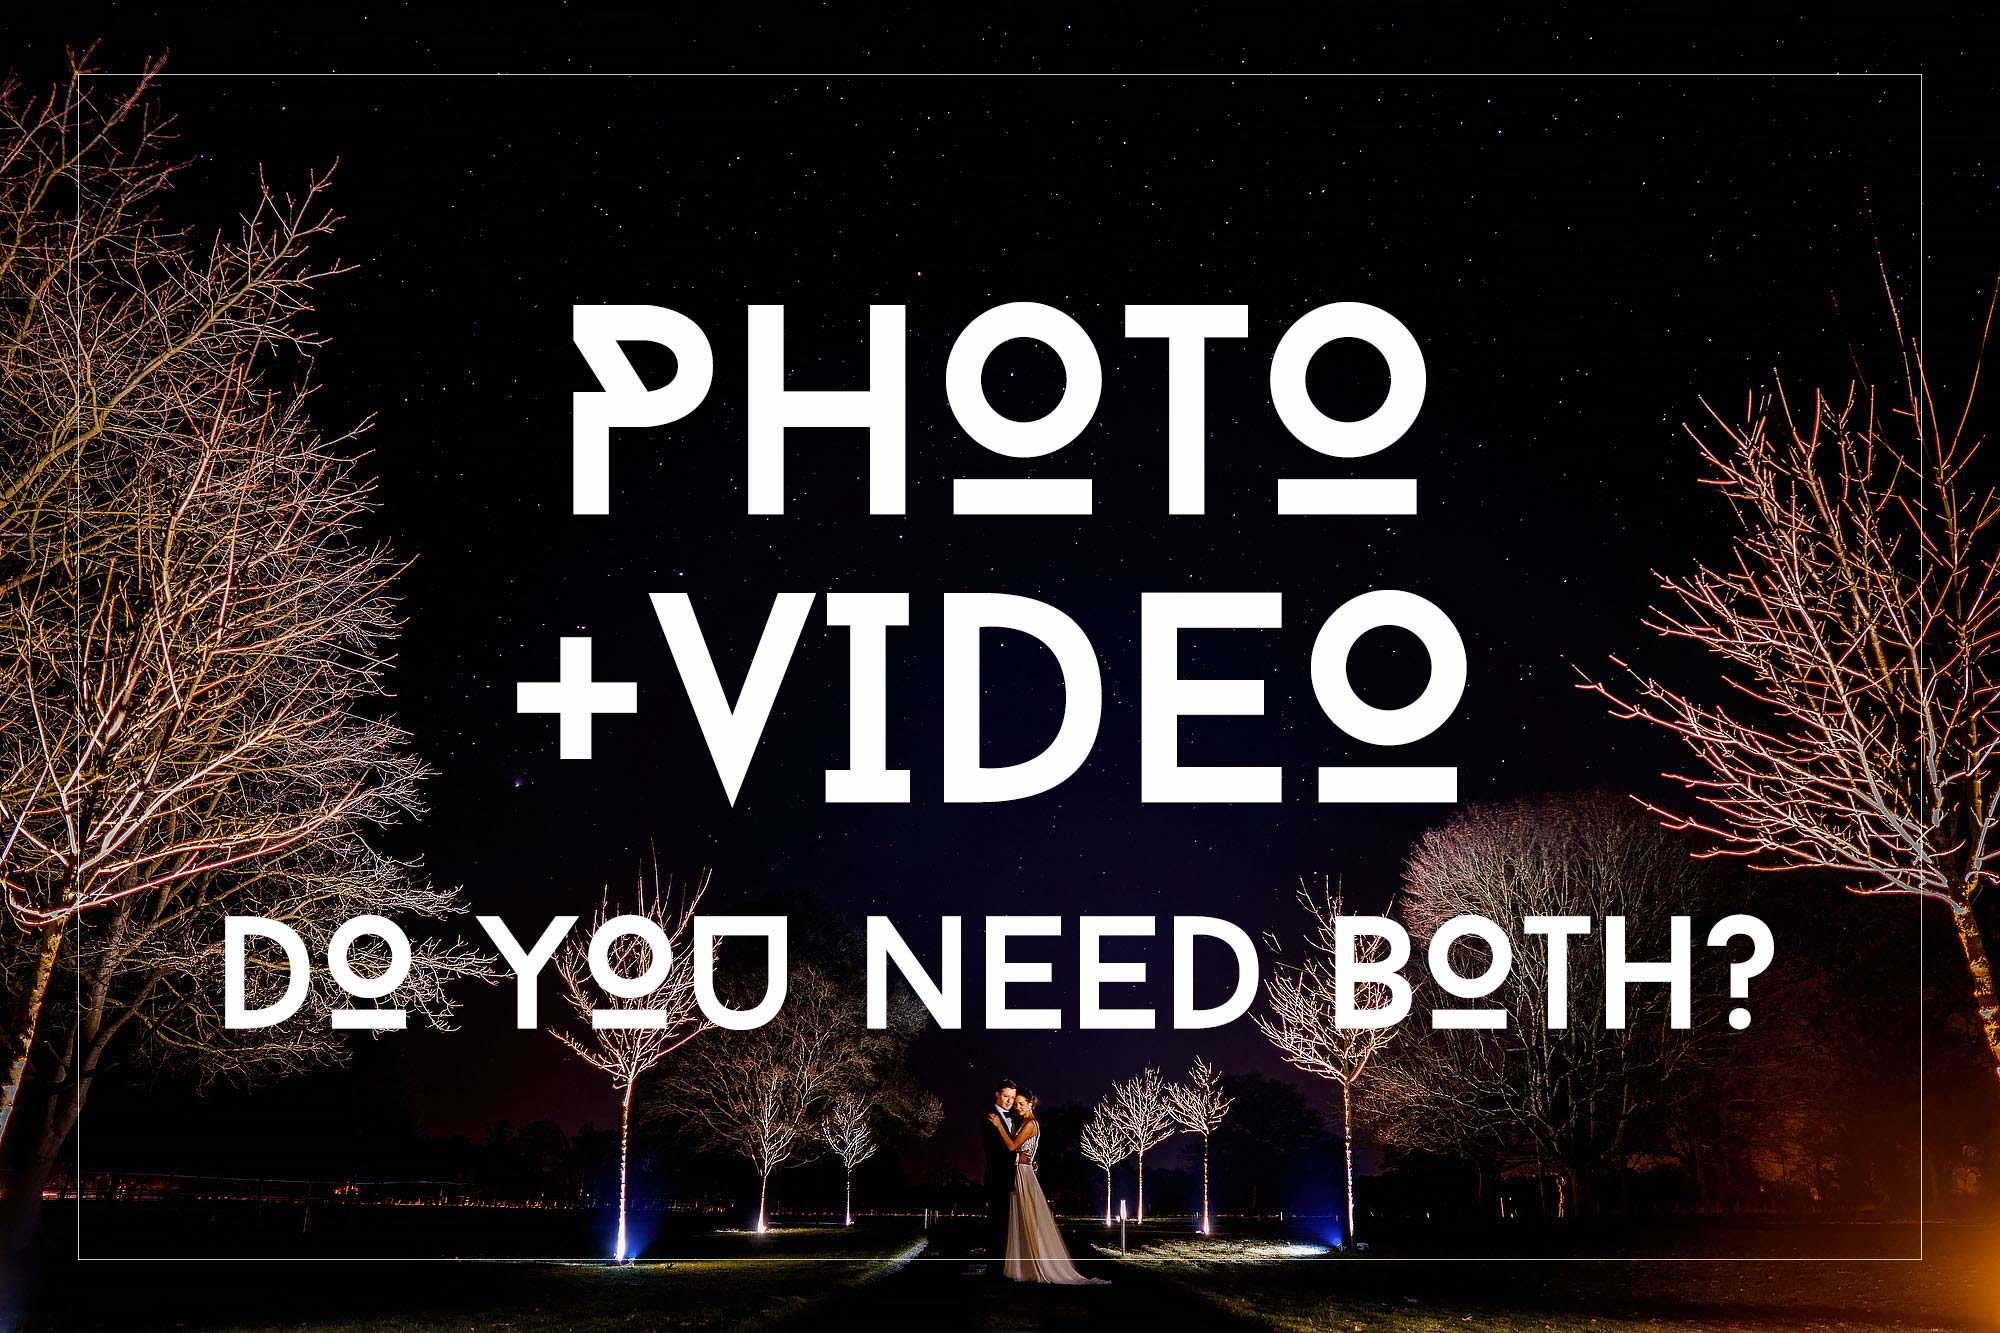 Wedding photo and video - do you need both?